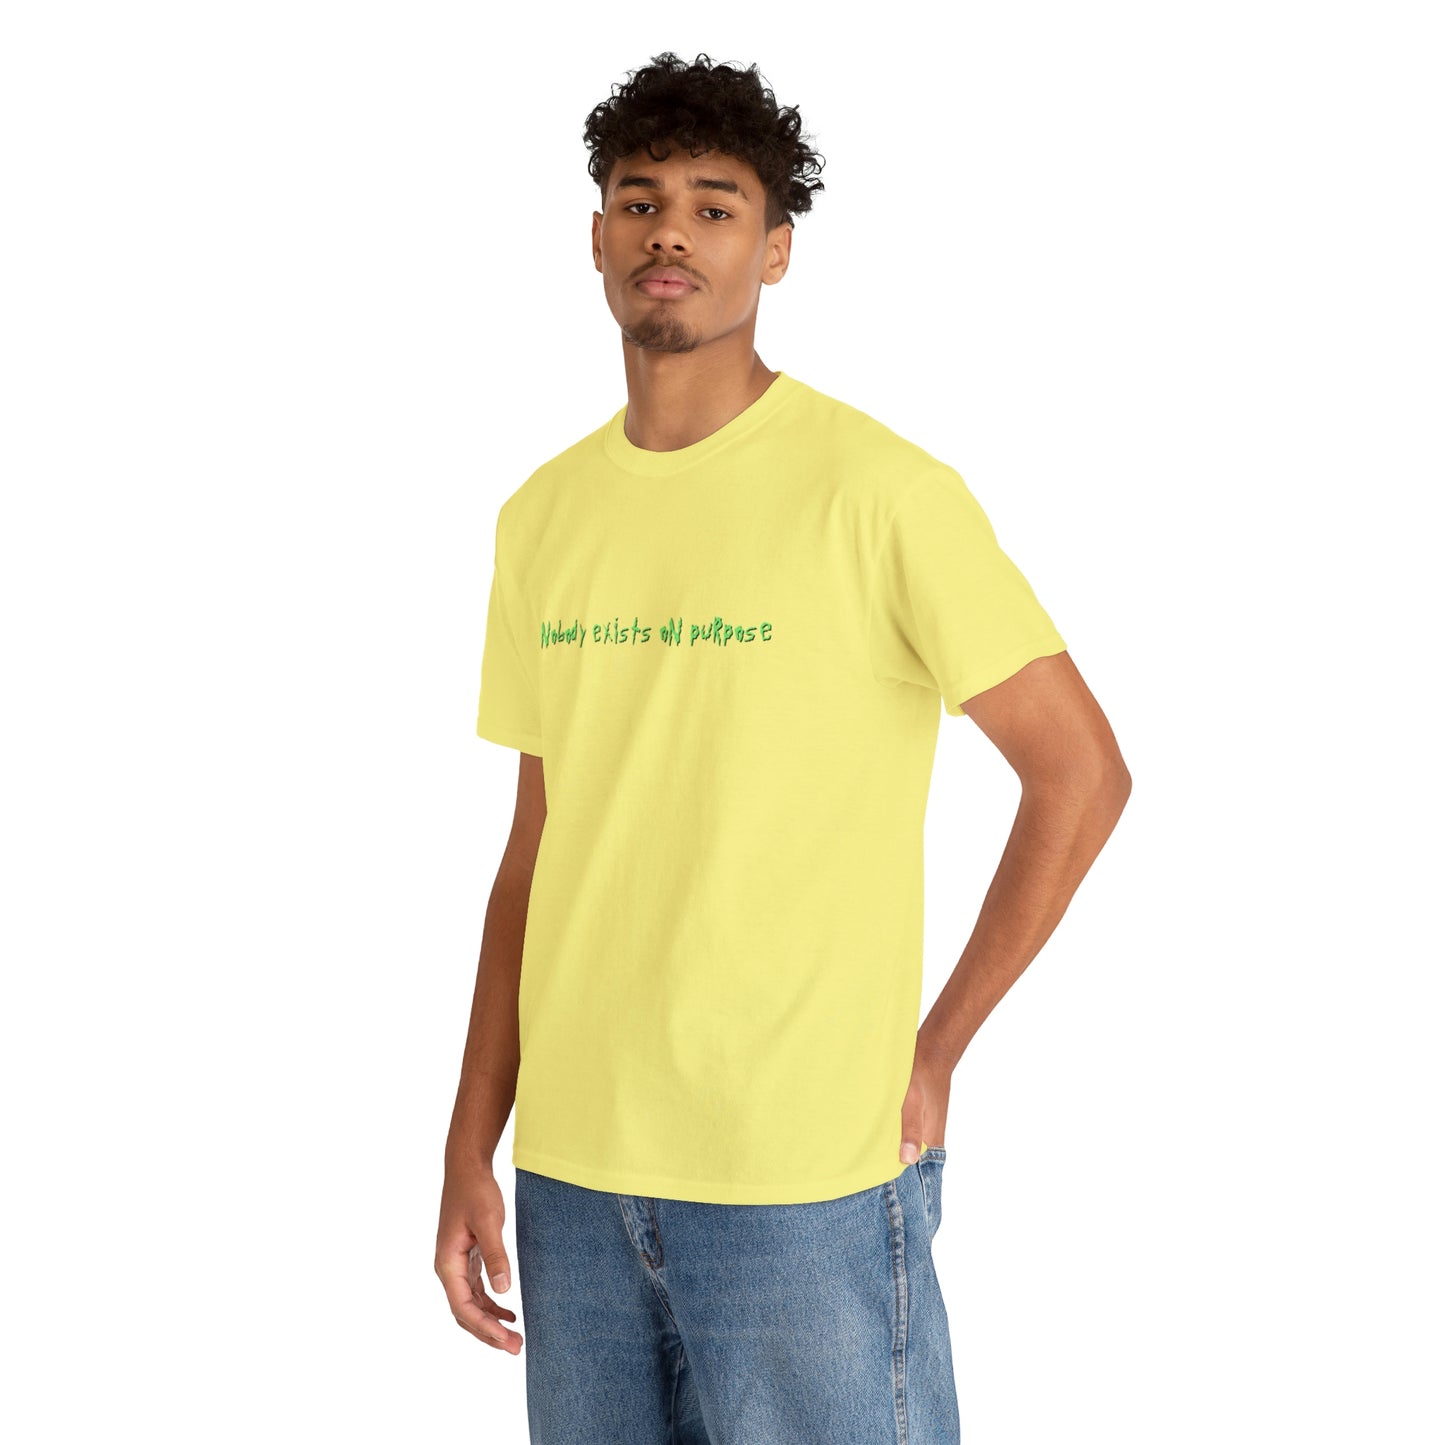 Nobod Exists on Purpose - Unisex T-Shirt